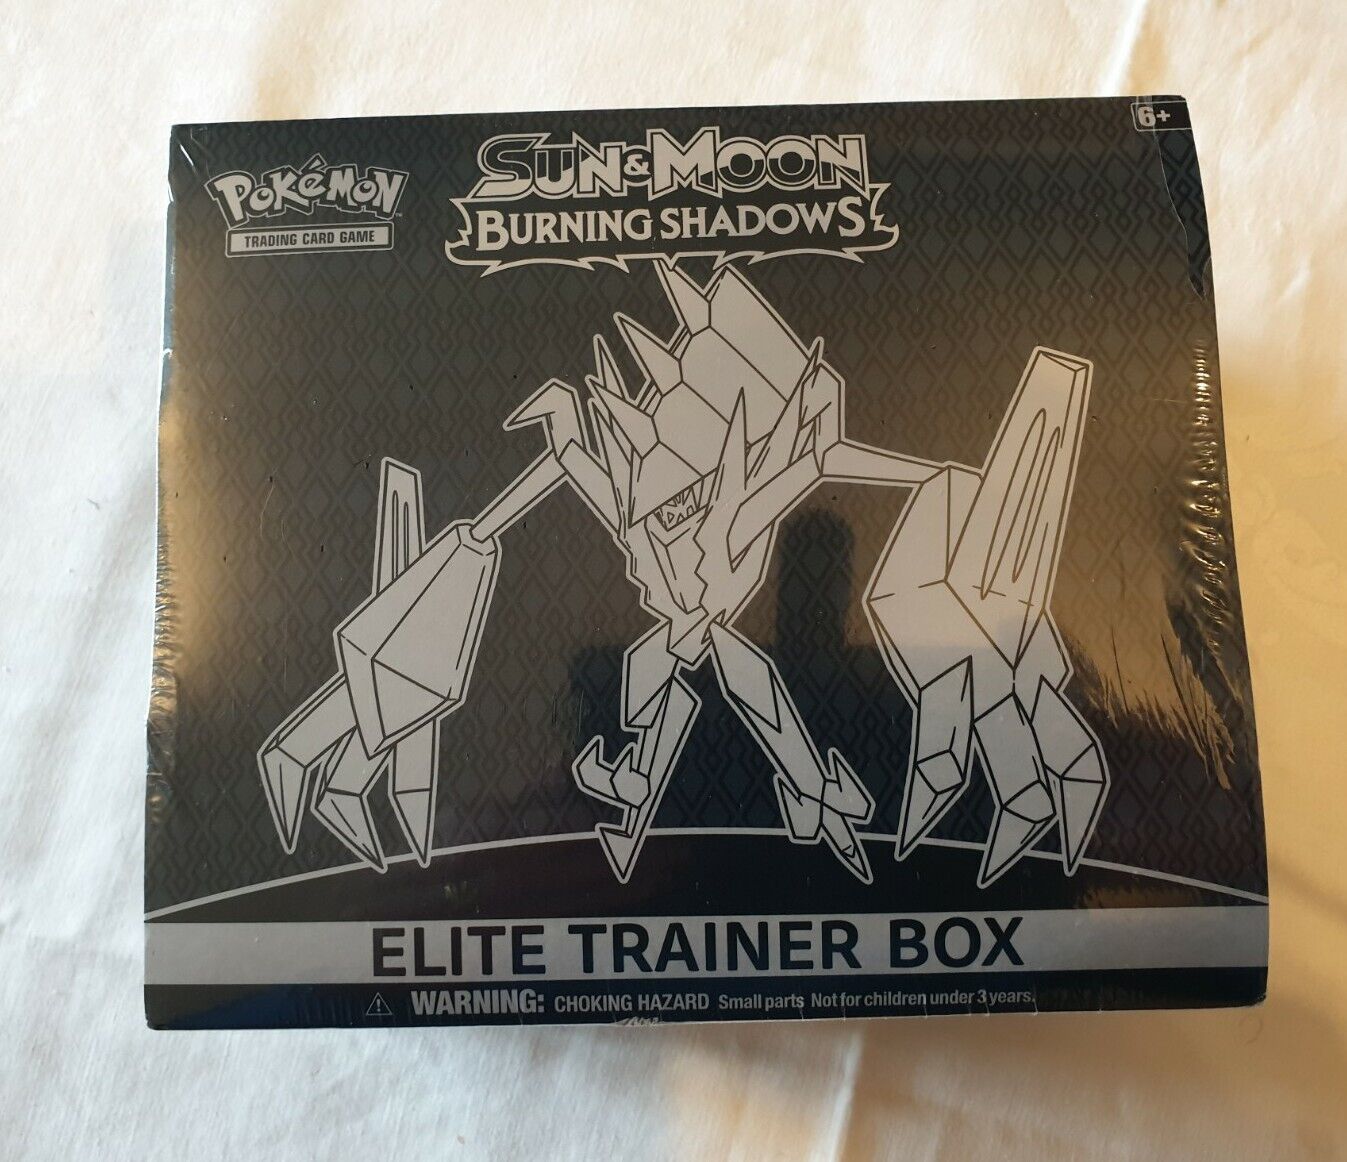 Pokémon TCG Sun & Moon - Burning Shadows ETB Elite Trainer Box OPENED, NO PACKS